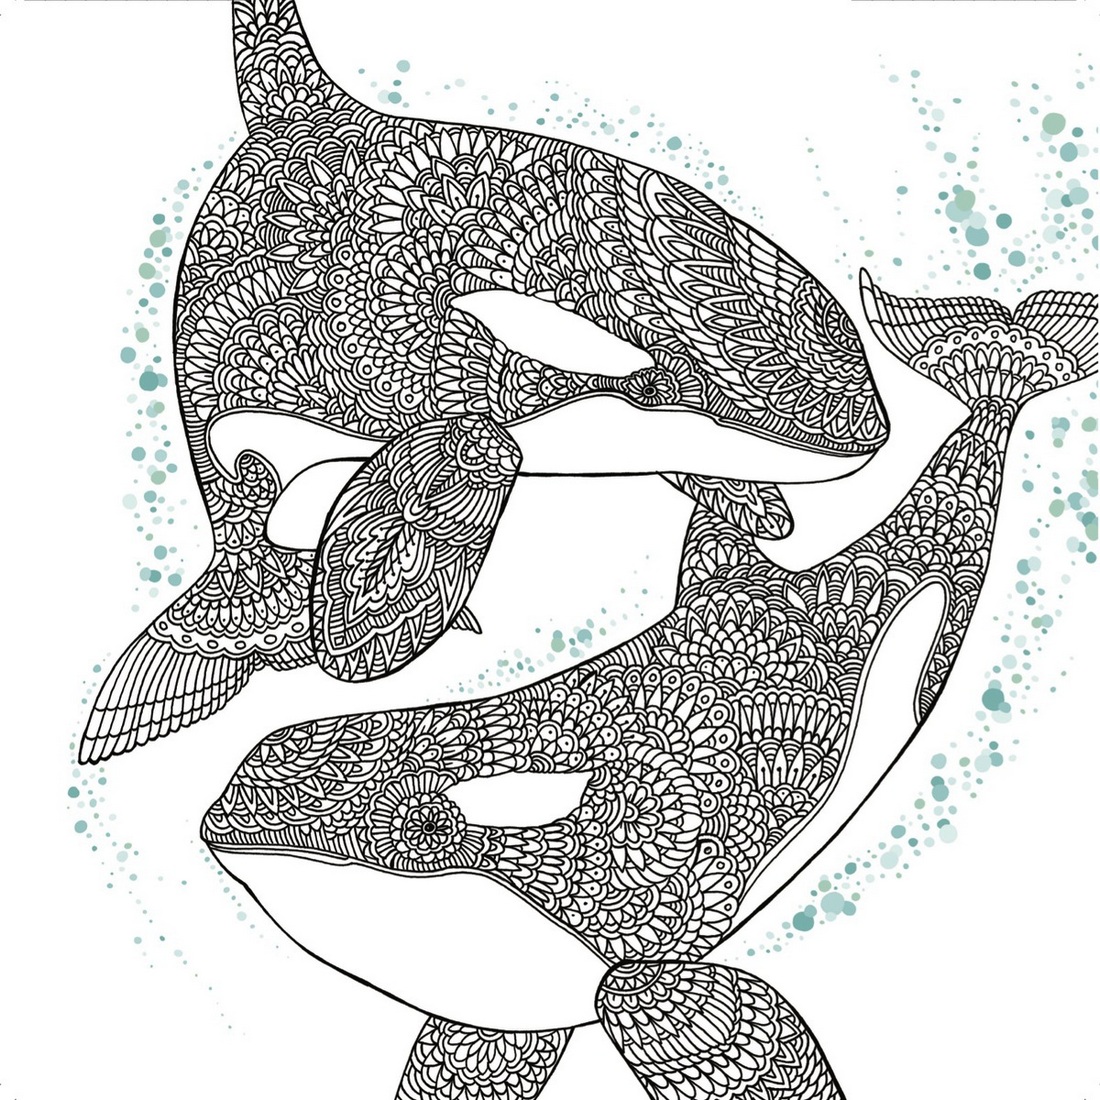 The-Aquarium-Marine-Portraits-Coloring-Book-Dolphin